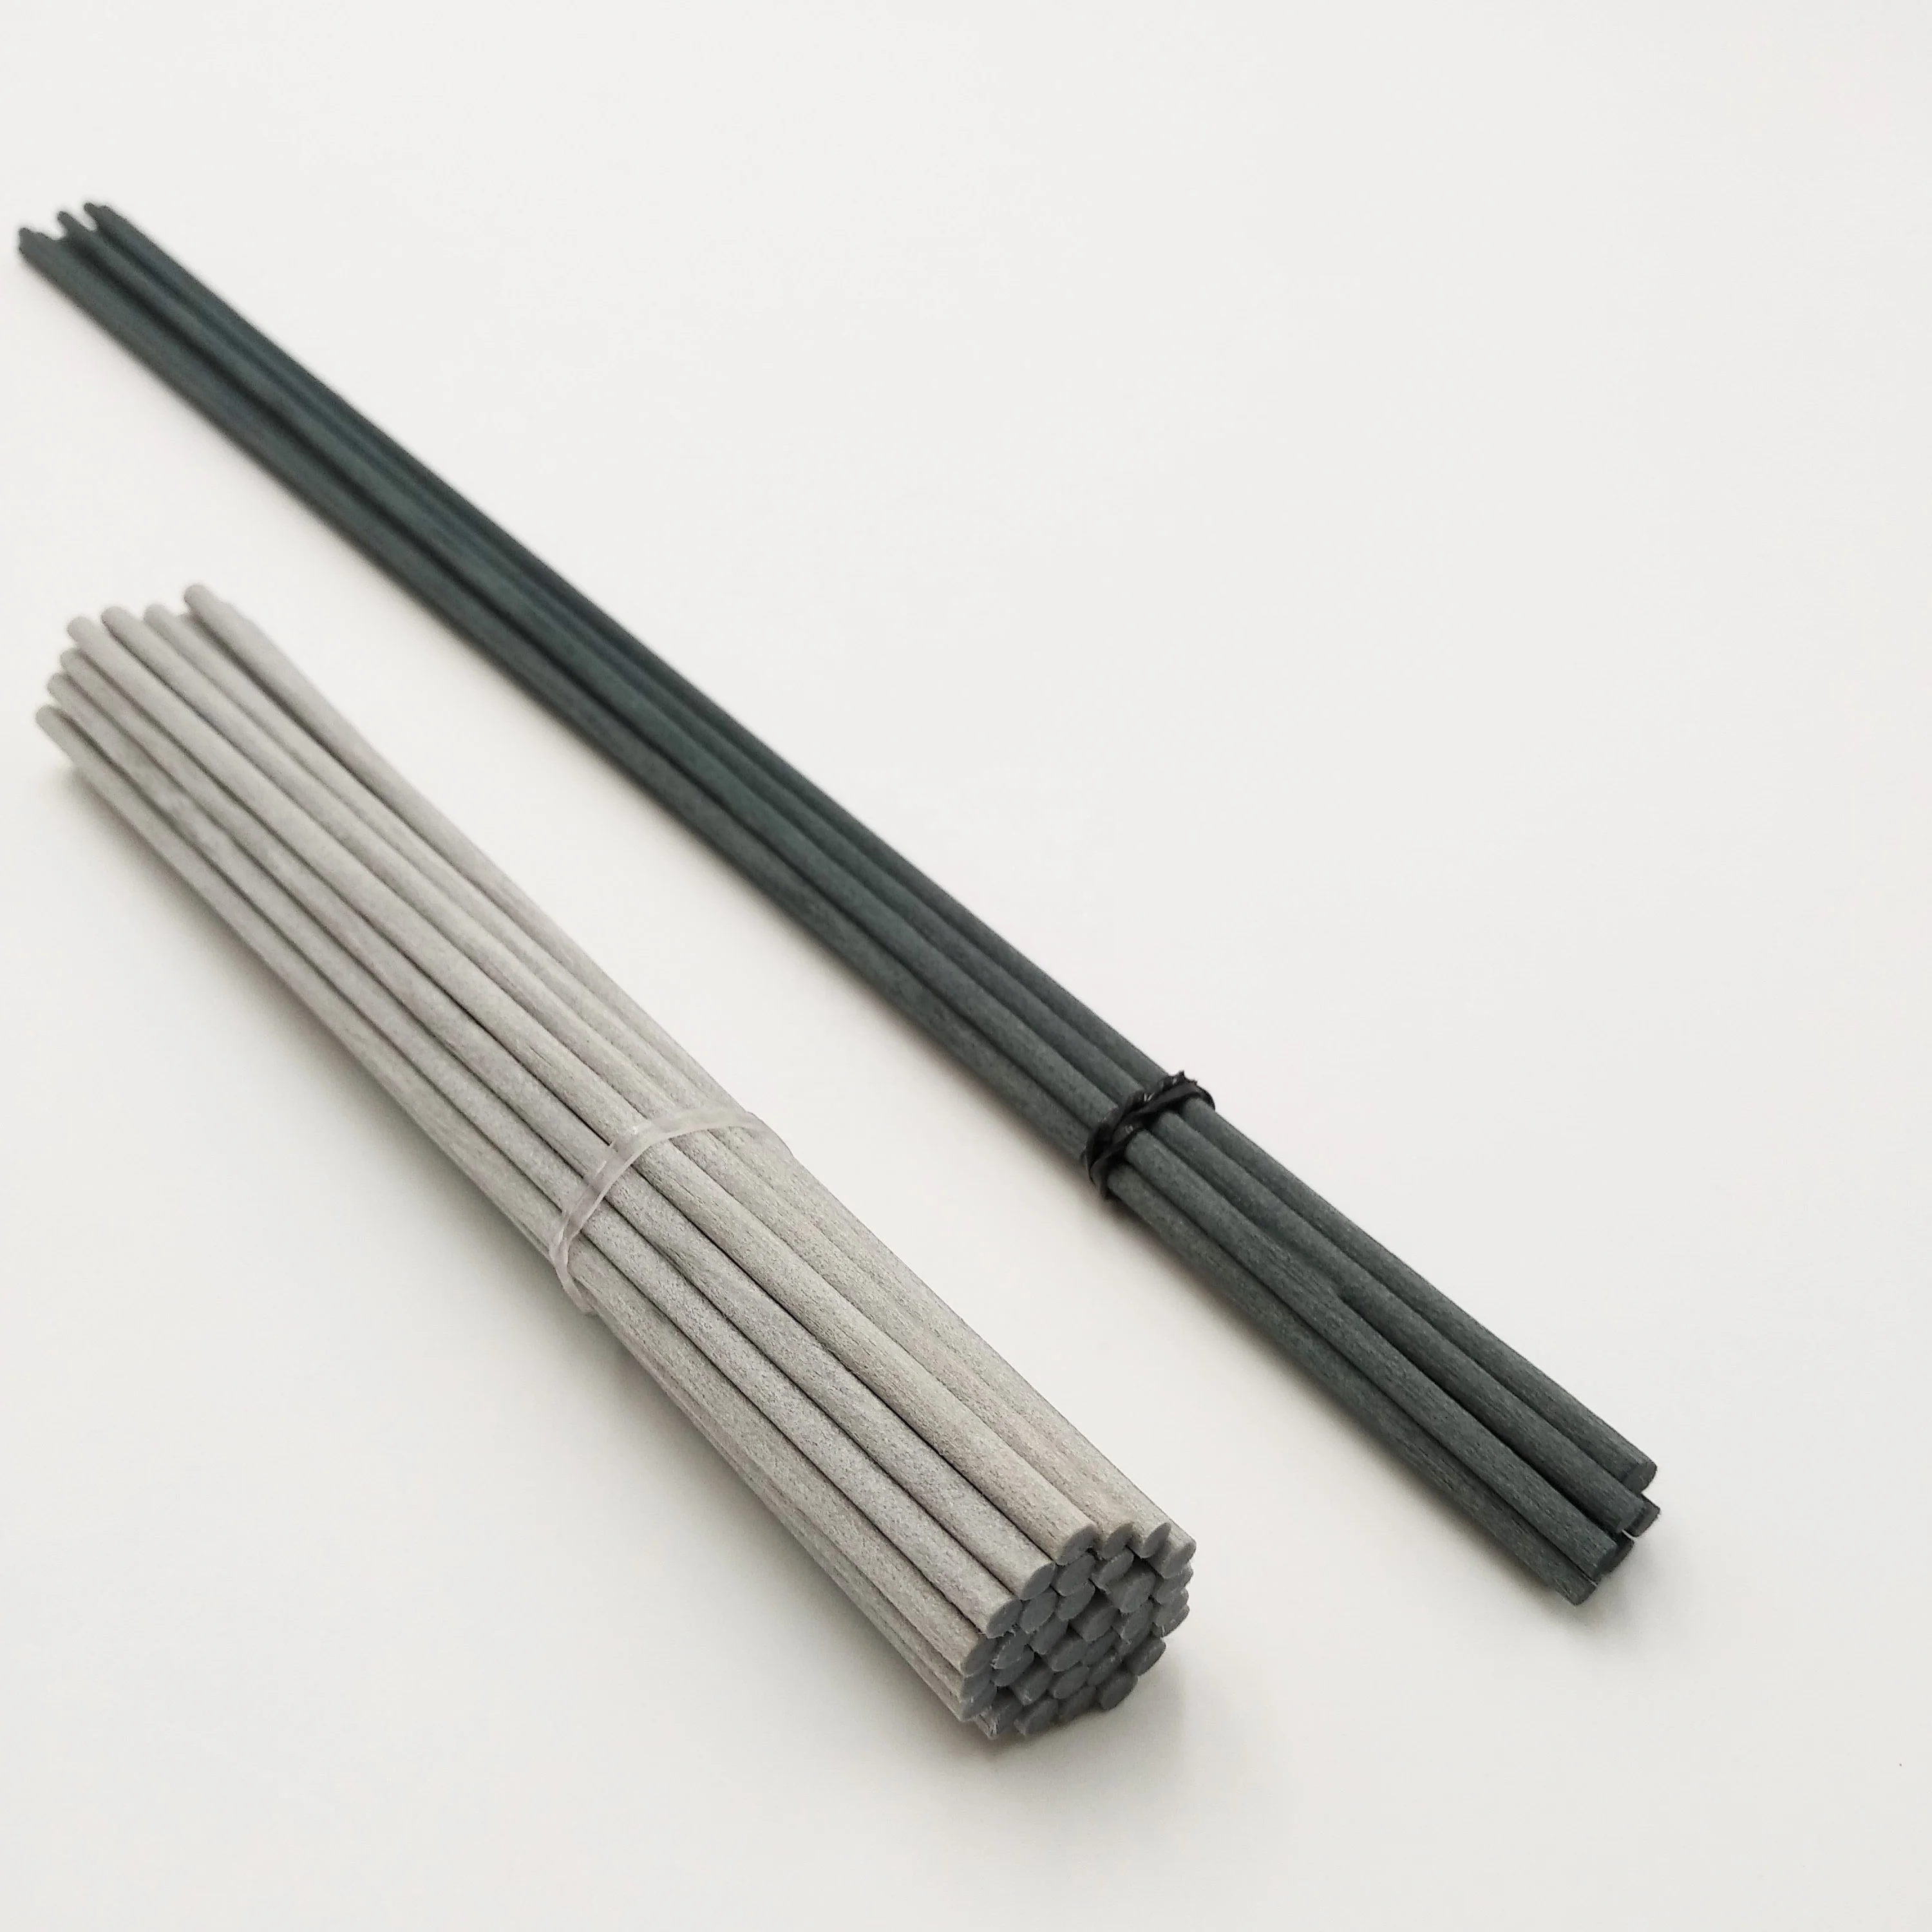 
3mm Black Synthetic Diffuser Sticks Fiber Reed Sticks 